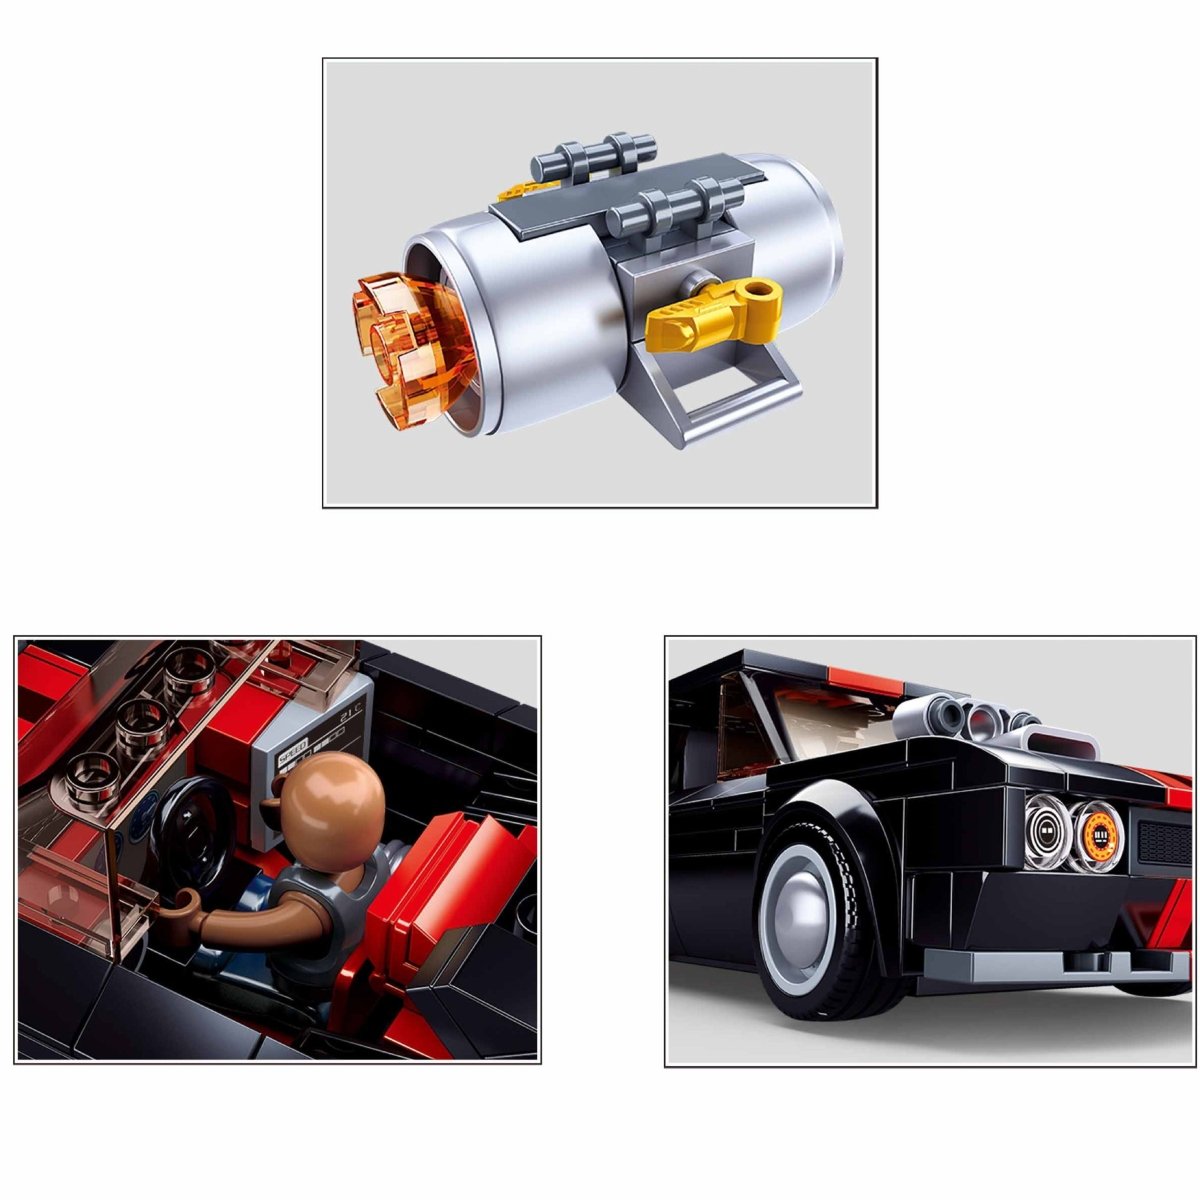 SLUBAN Building Blocks Kit for Boys and Girls - Modified Car 2 IN 1 - M38-B1085